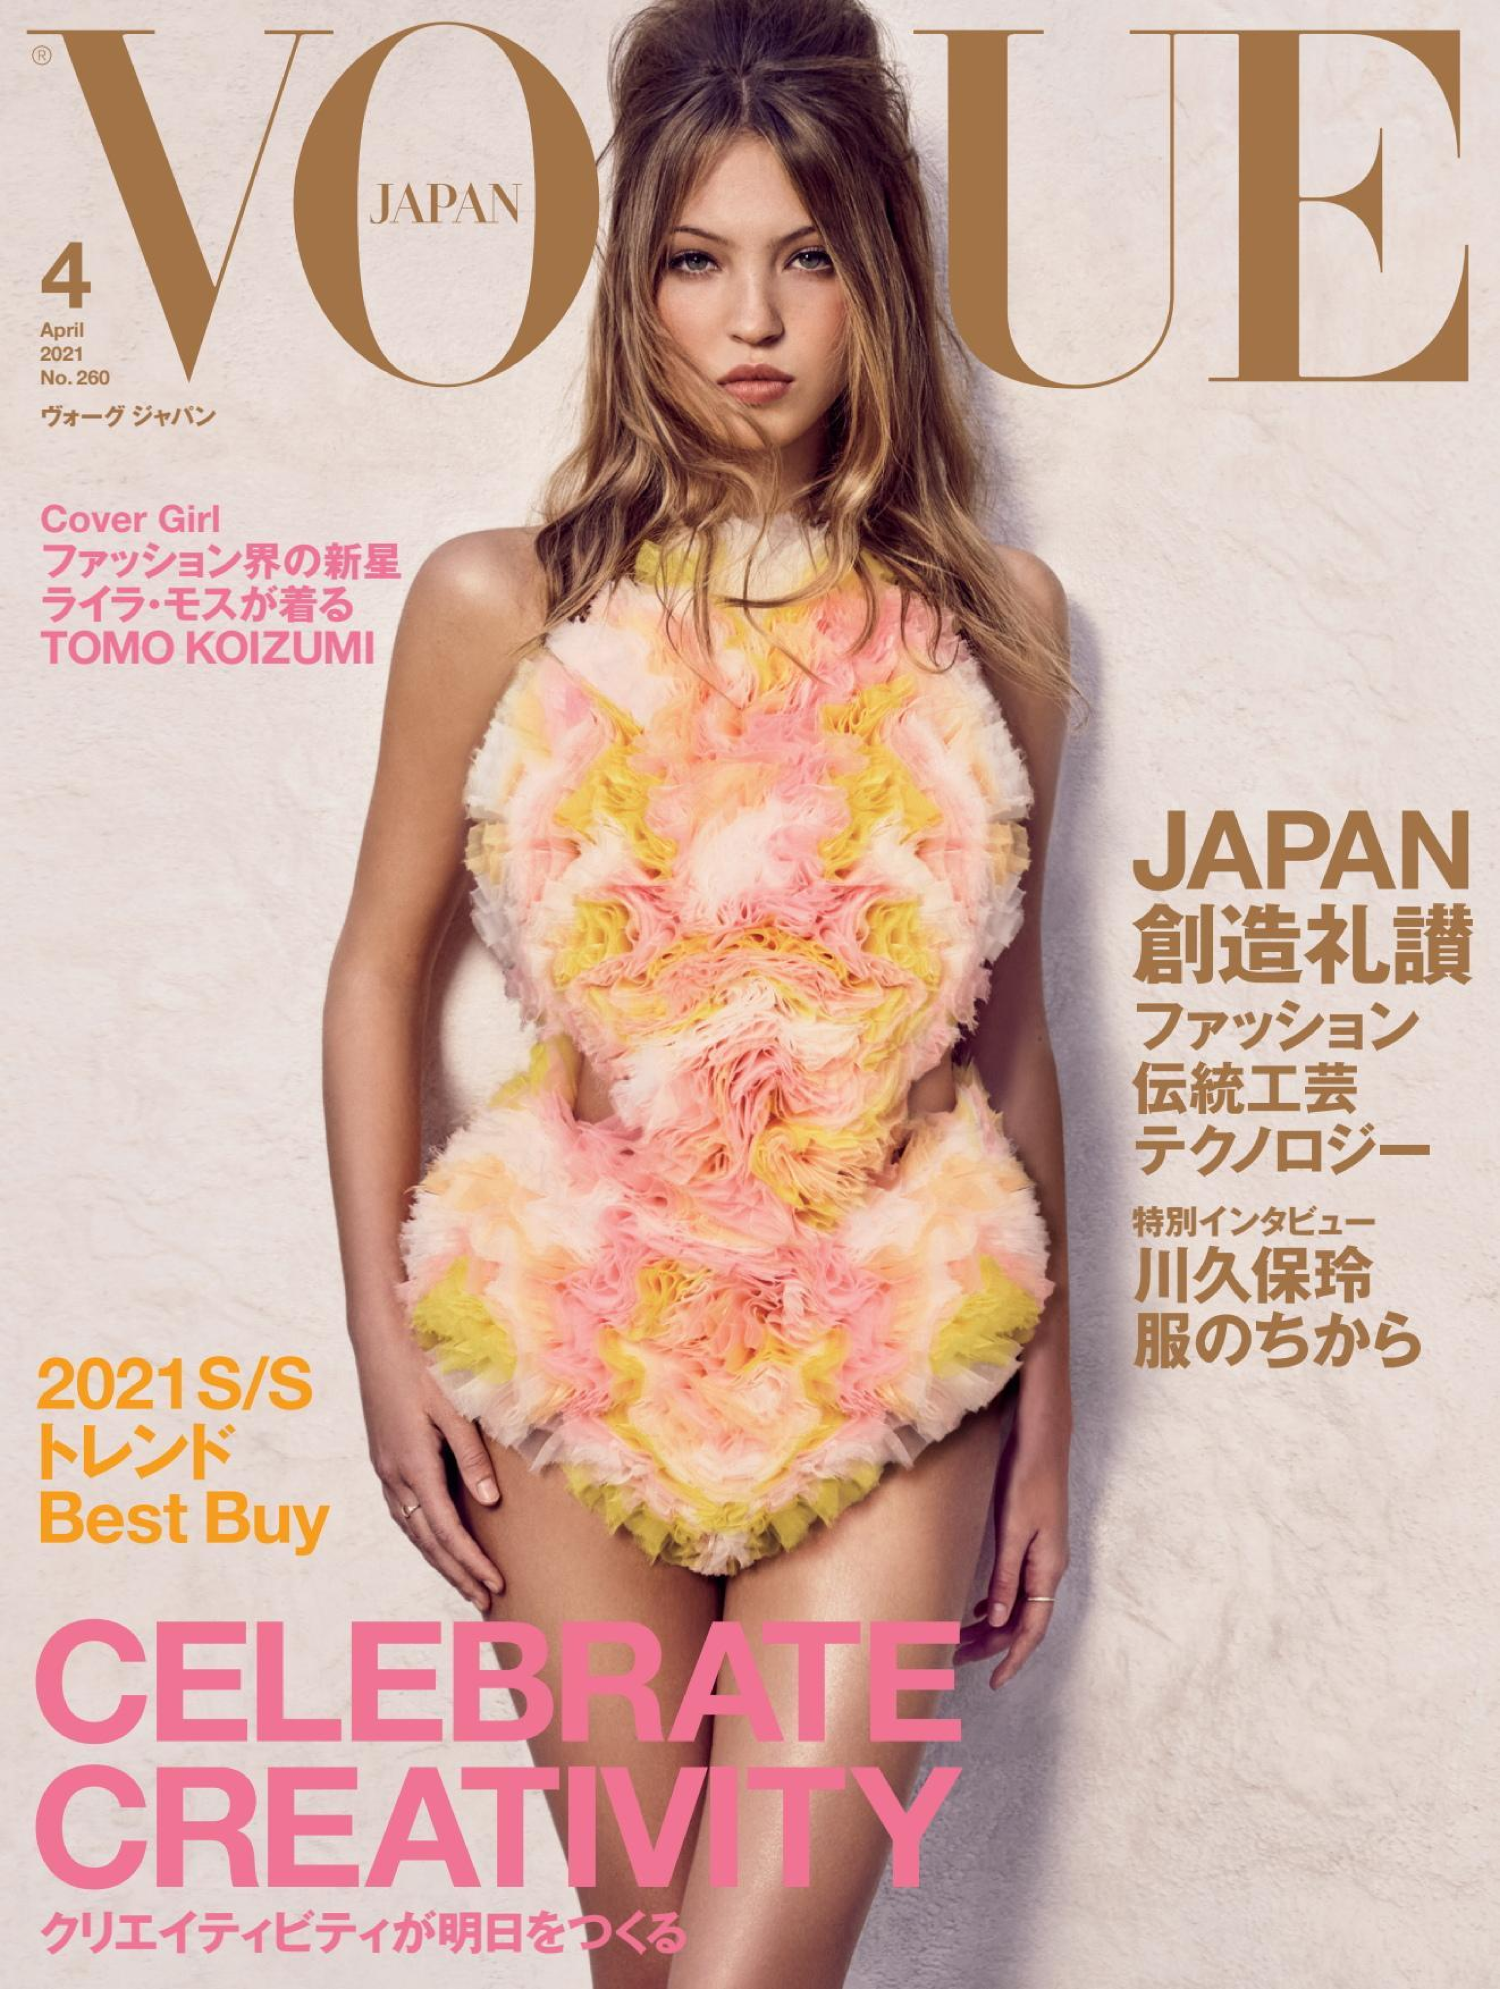 Lila Moss by Luigi Iango Vogue Japan April 2021 (5).png